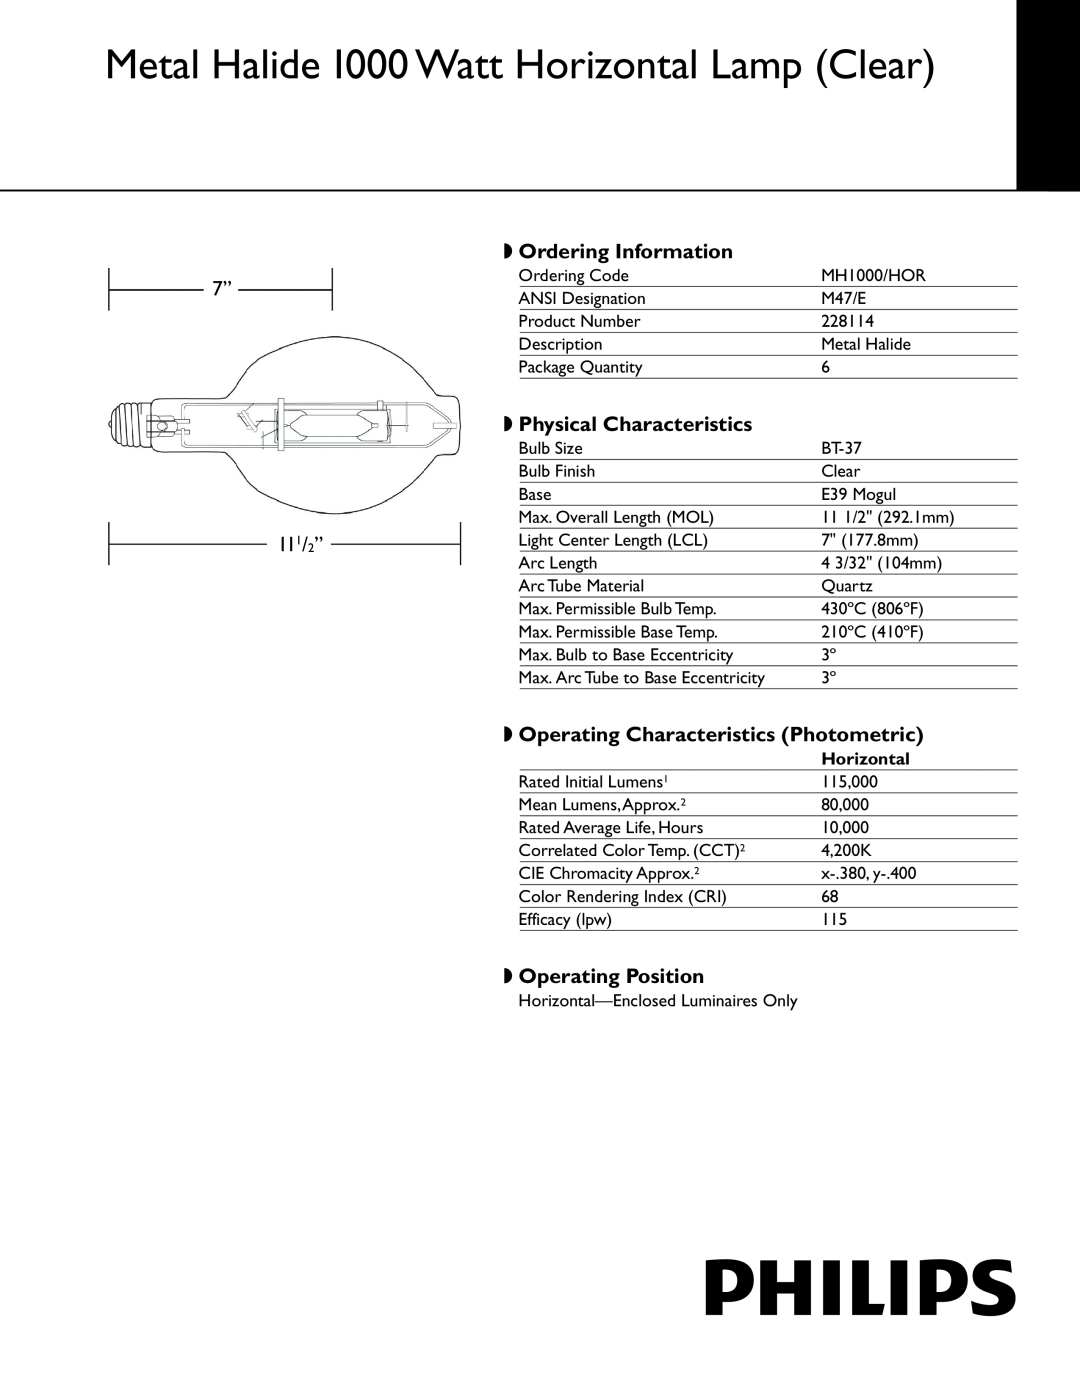 Philips 228114 manual Metal Halide 1000 Watt Horizontal Lamp Clear, Ordering Information, Physical Characteristics 